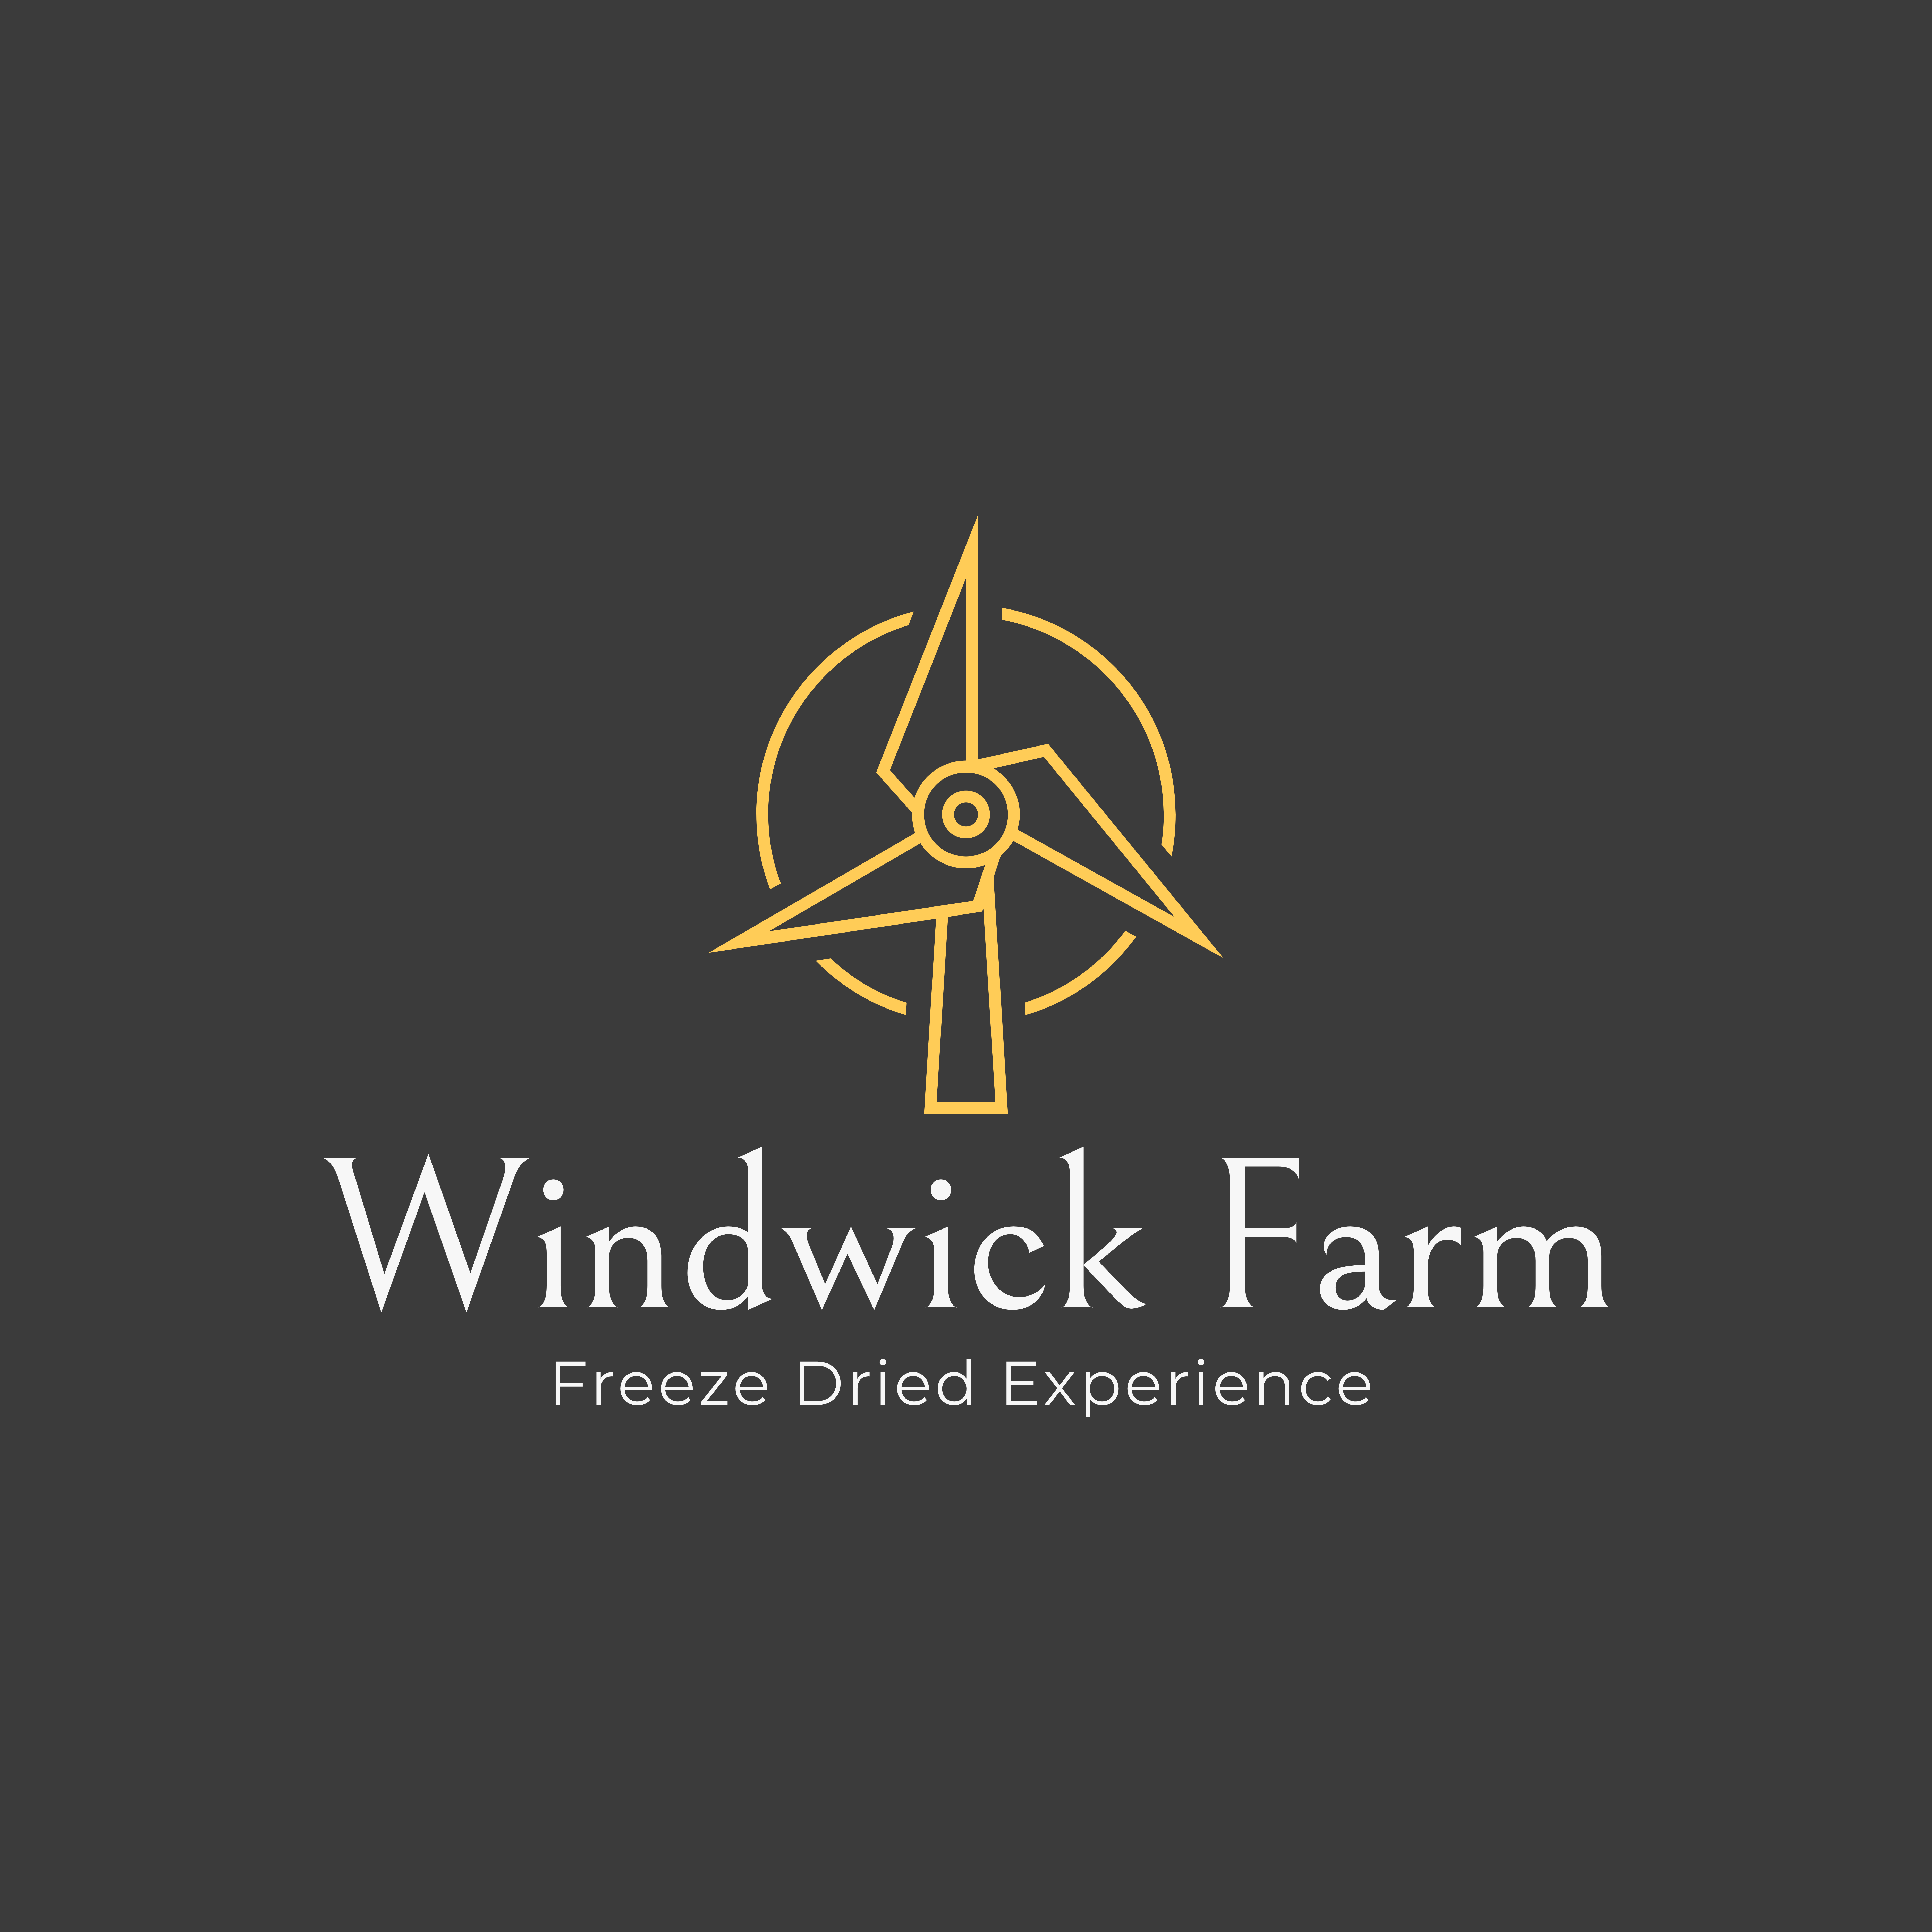 WindwickFarm